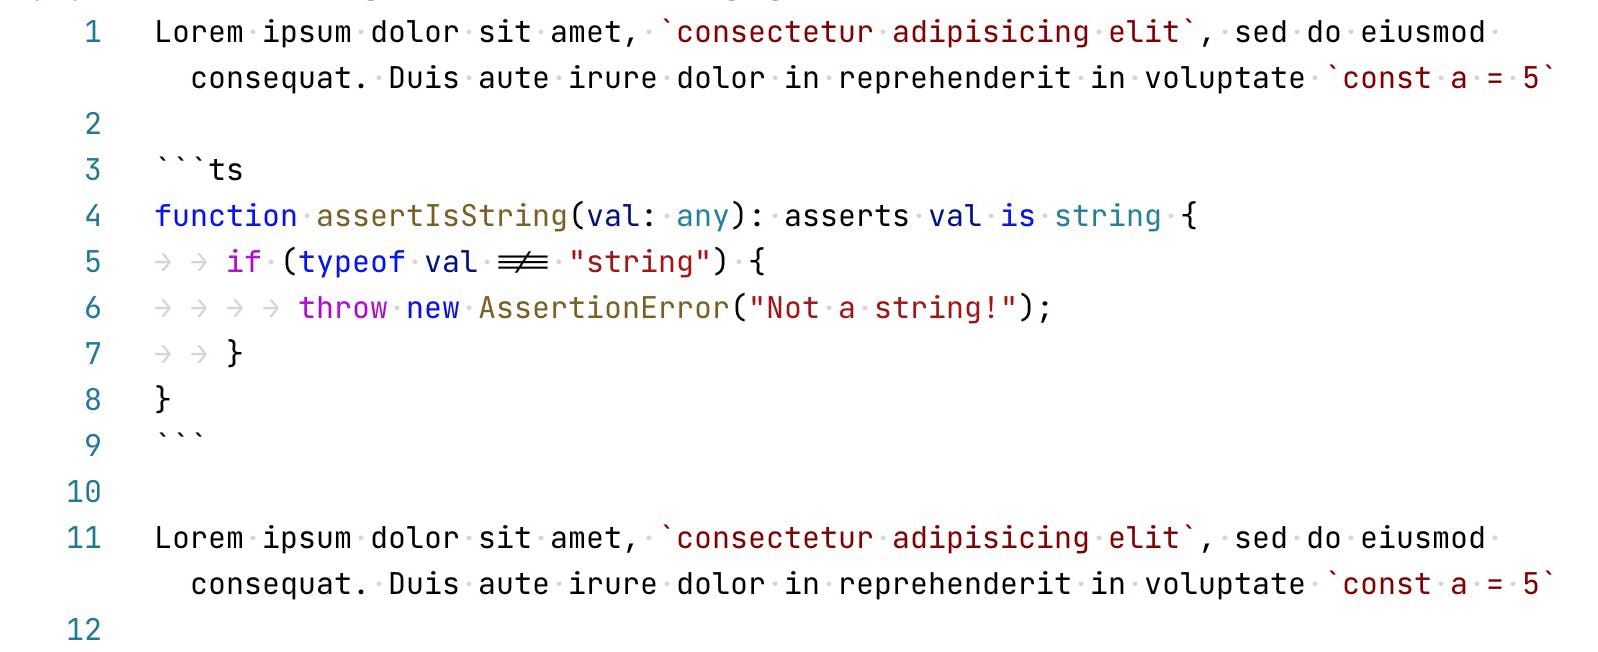 VS Code lack of code blocks styling